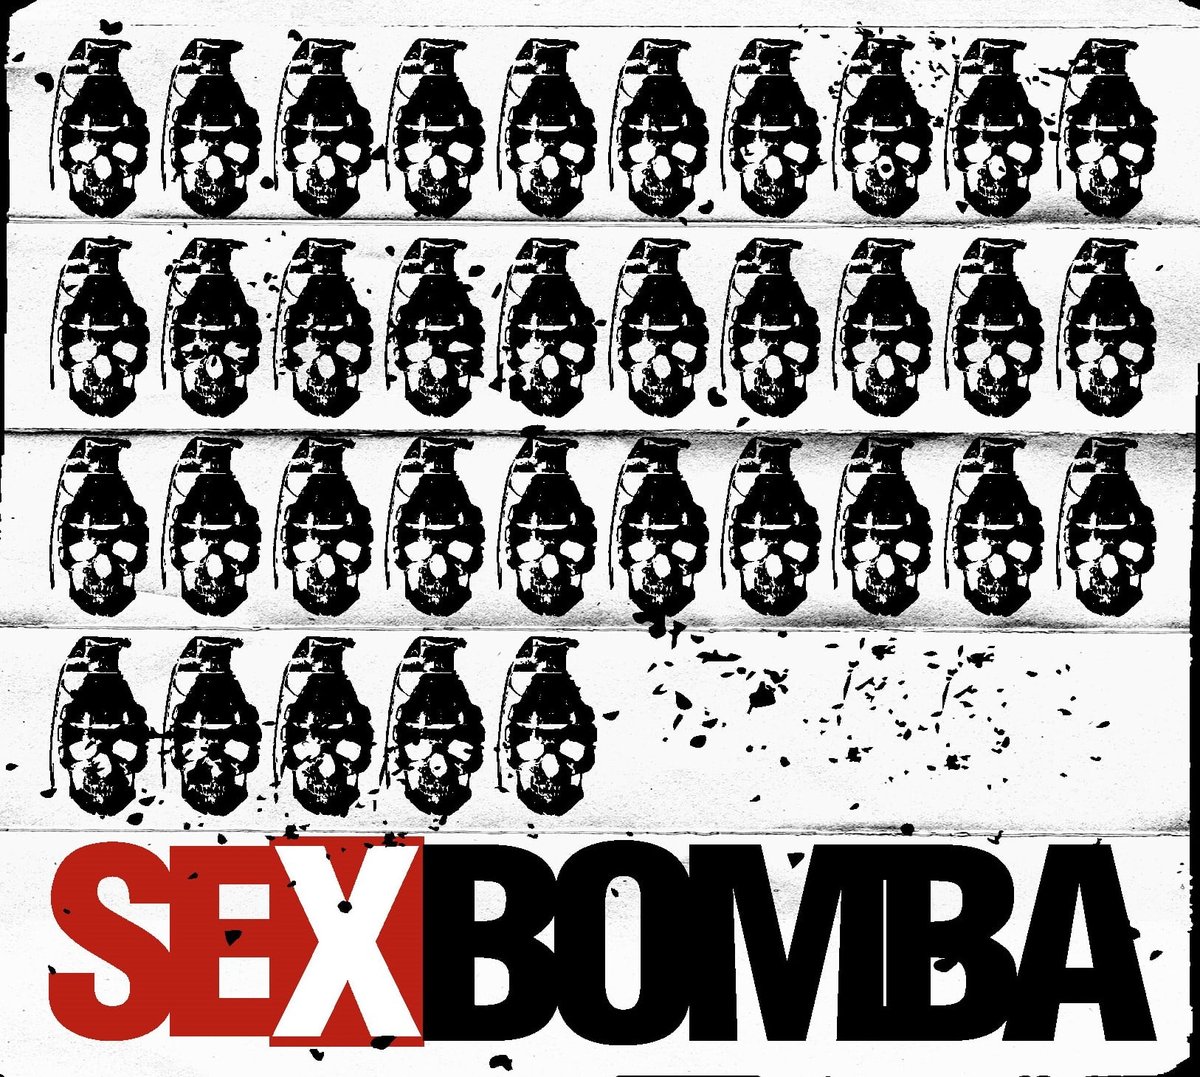 Sexbomba: XXXV